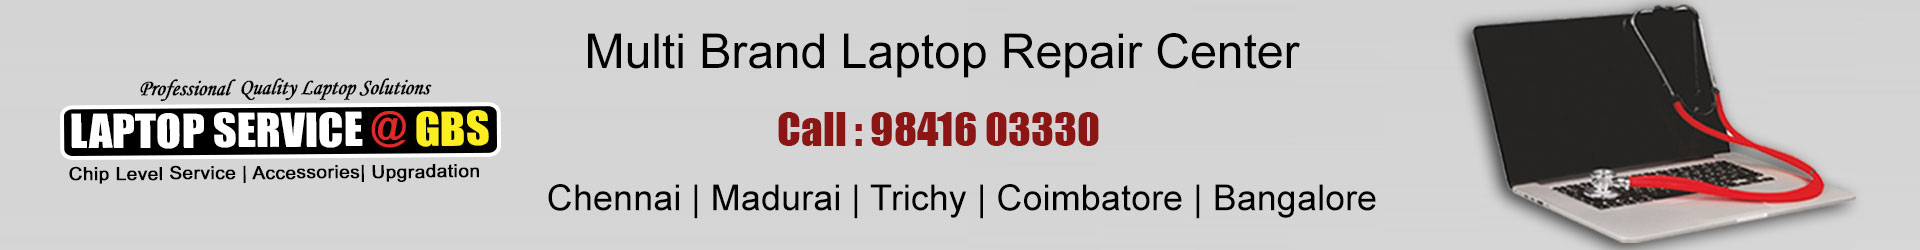 laptop service center in tambaram